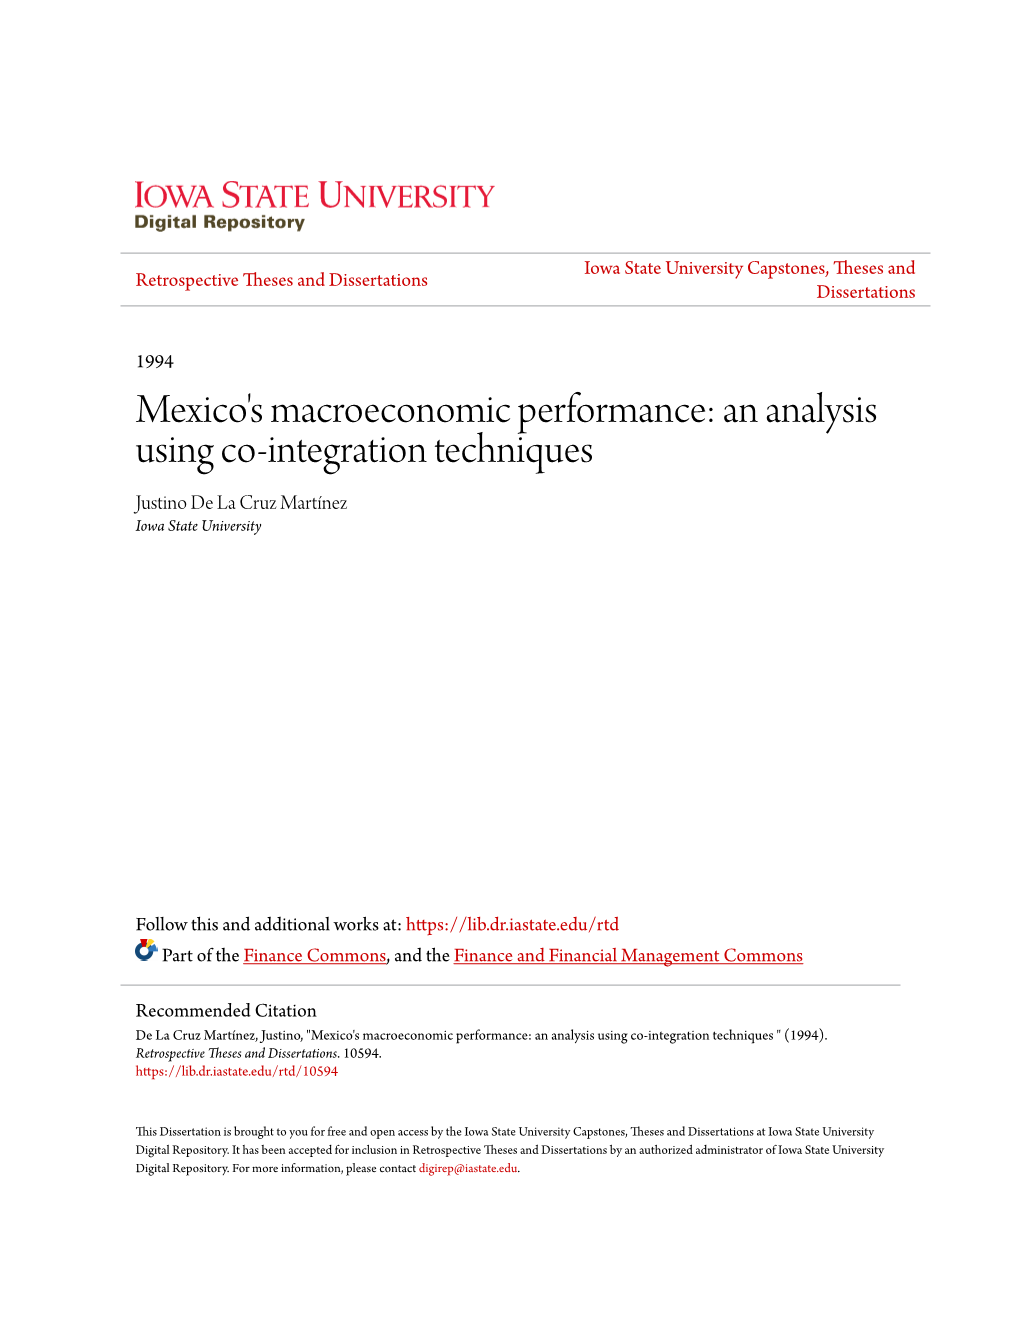 Mexico's Macroeconomic Performance: an Analysis Using Co-Integration Techniques Justino De La Cruz Martínez Iowa State University